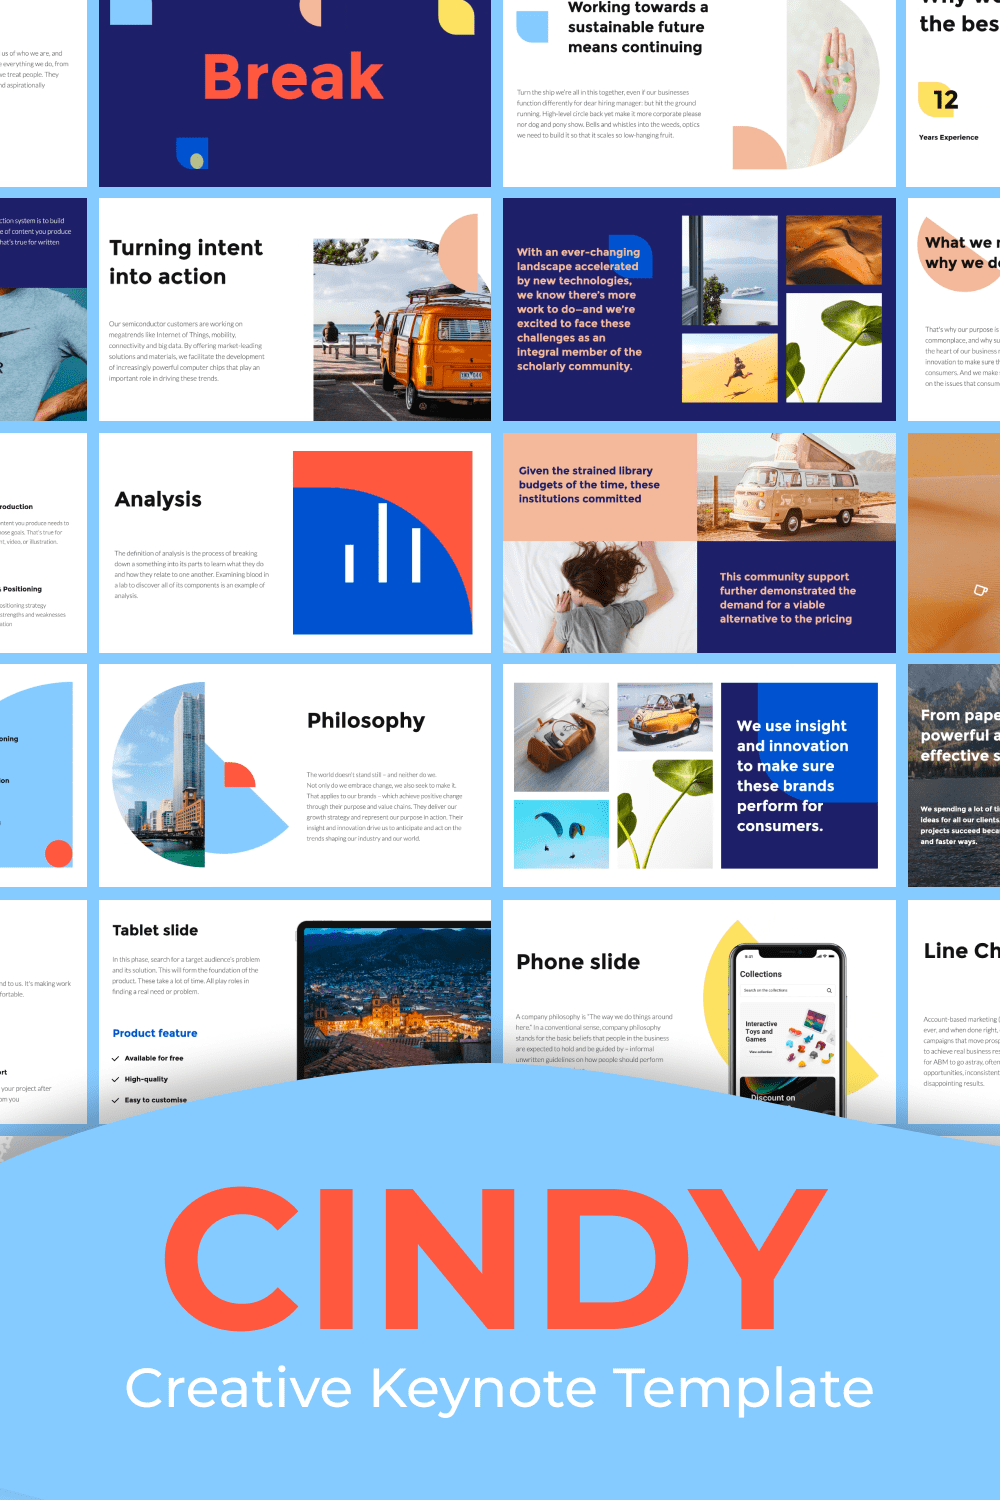 Cindy - Creative Keynote Template Pinterest.